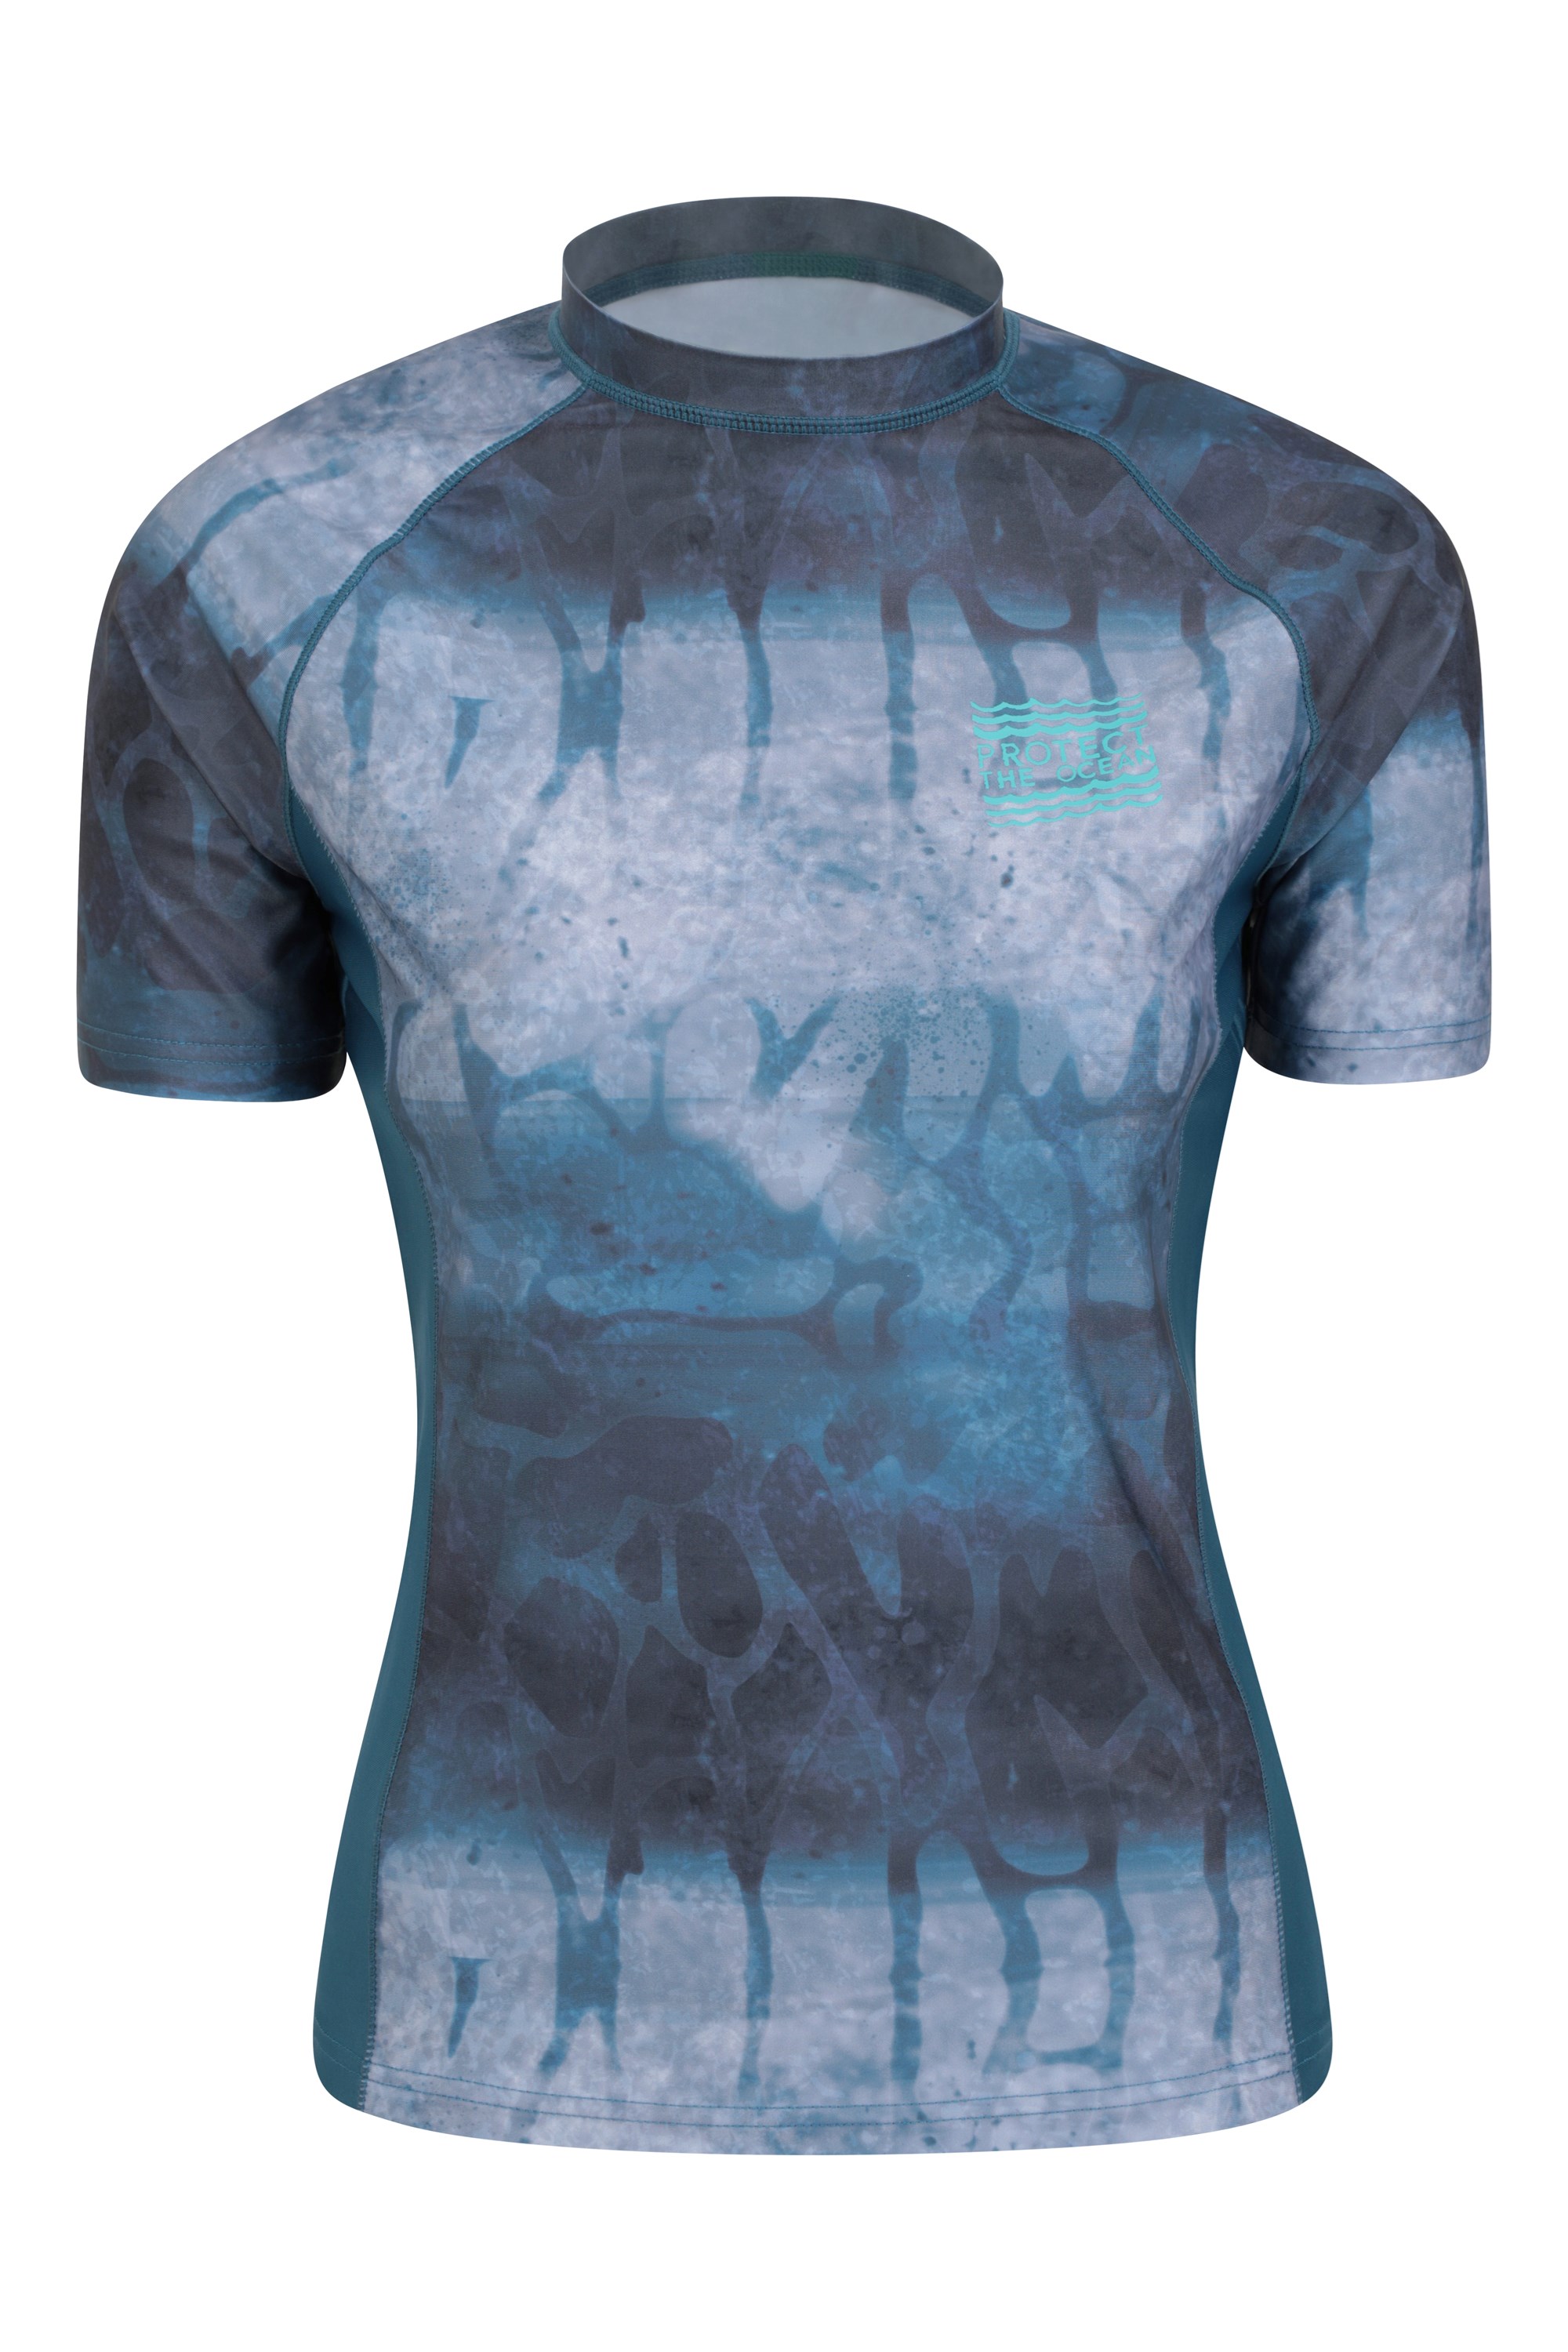 Steve Backshall Ocean Rash Vest koszulka damska do pływania z krótkim rękawem - Grey